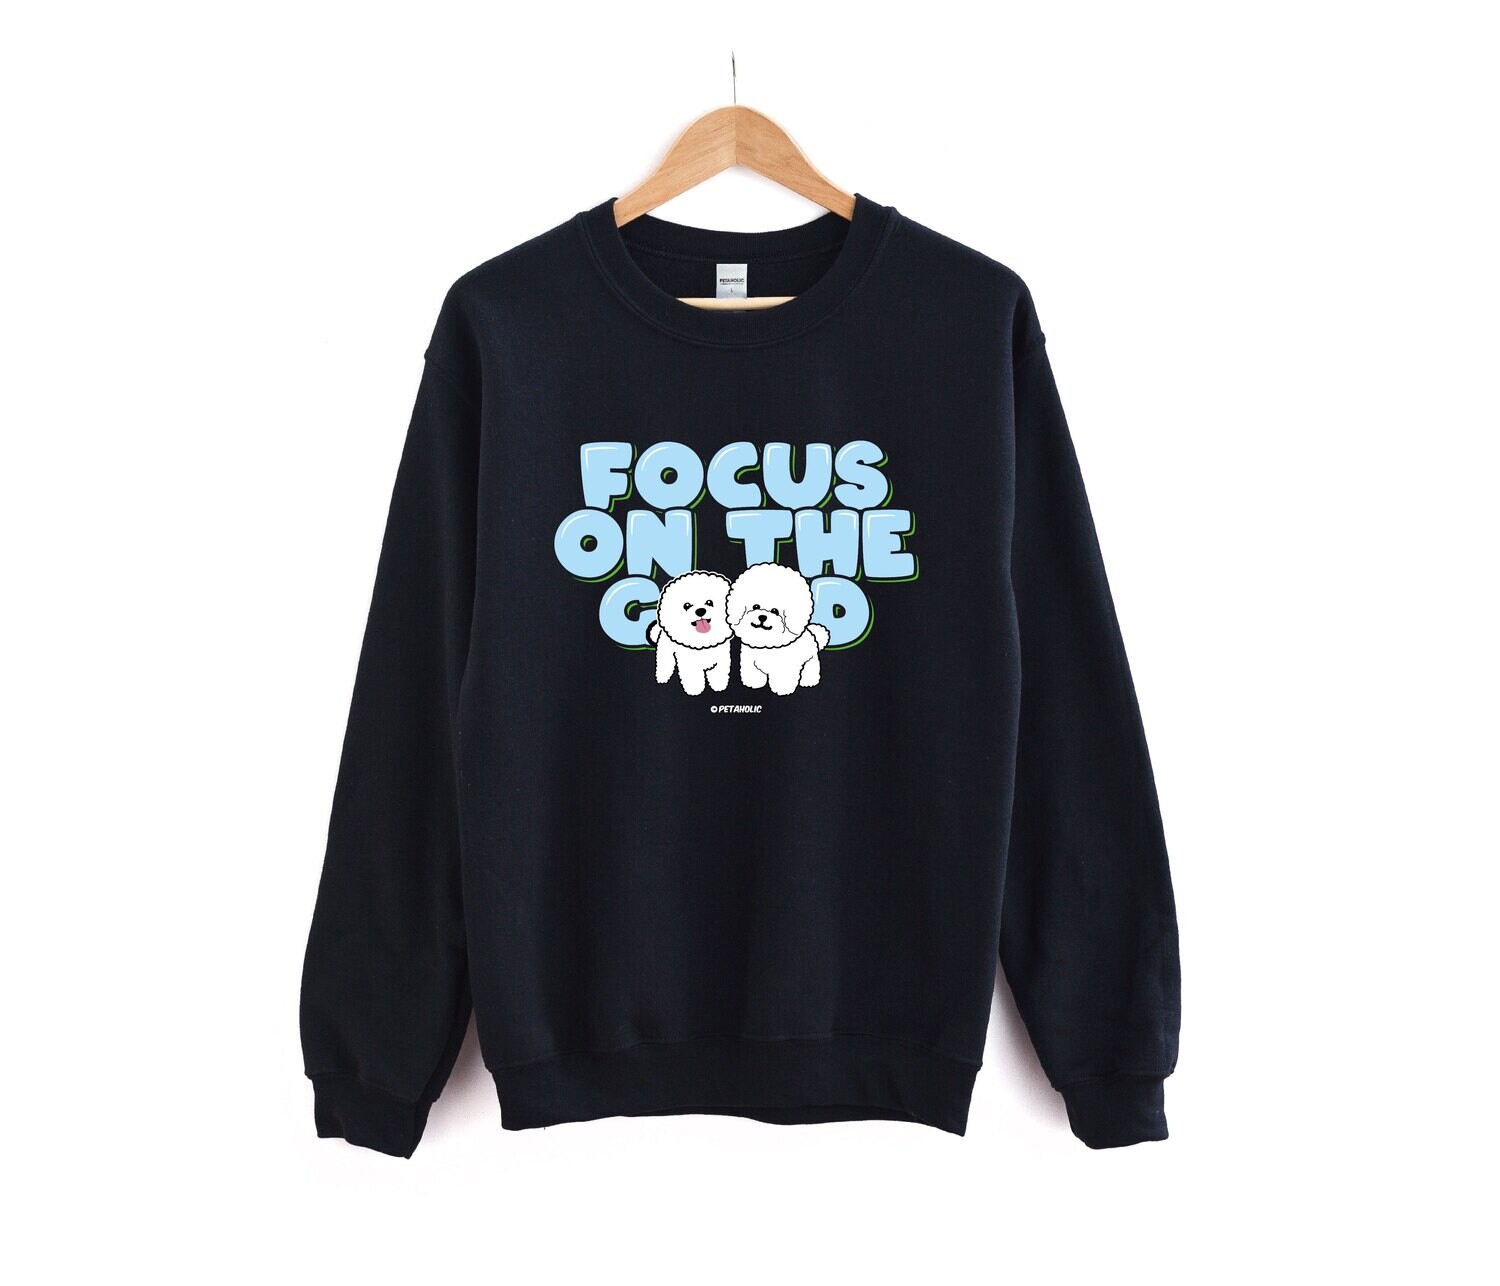 Bichon Firse Printed Crew Neck Sweatshirt, Color: Black, Size: M